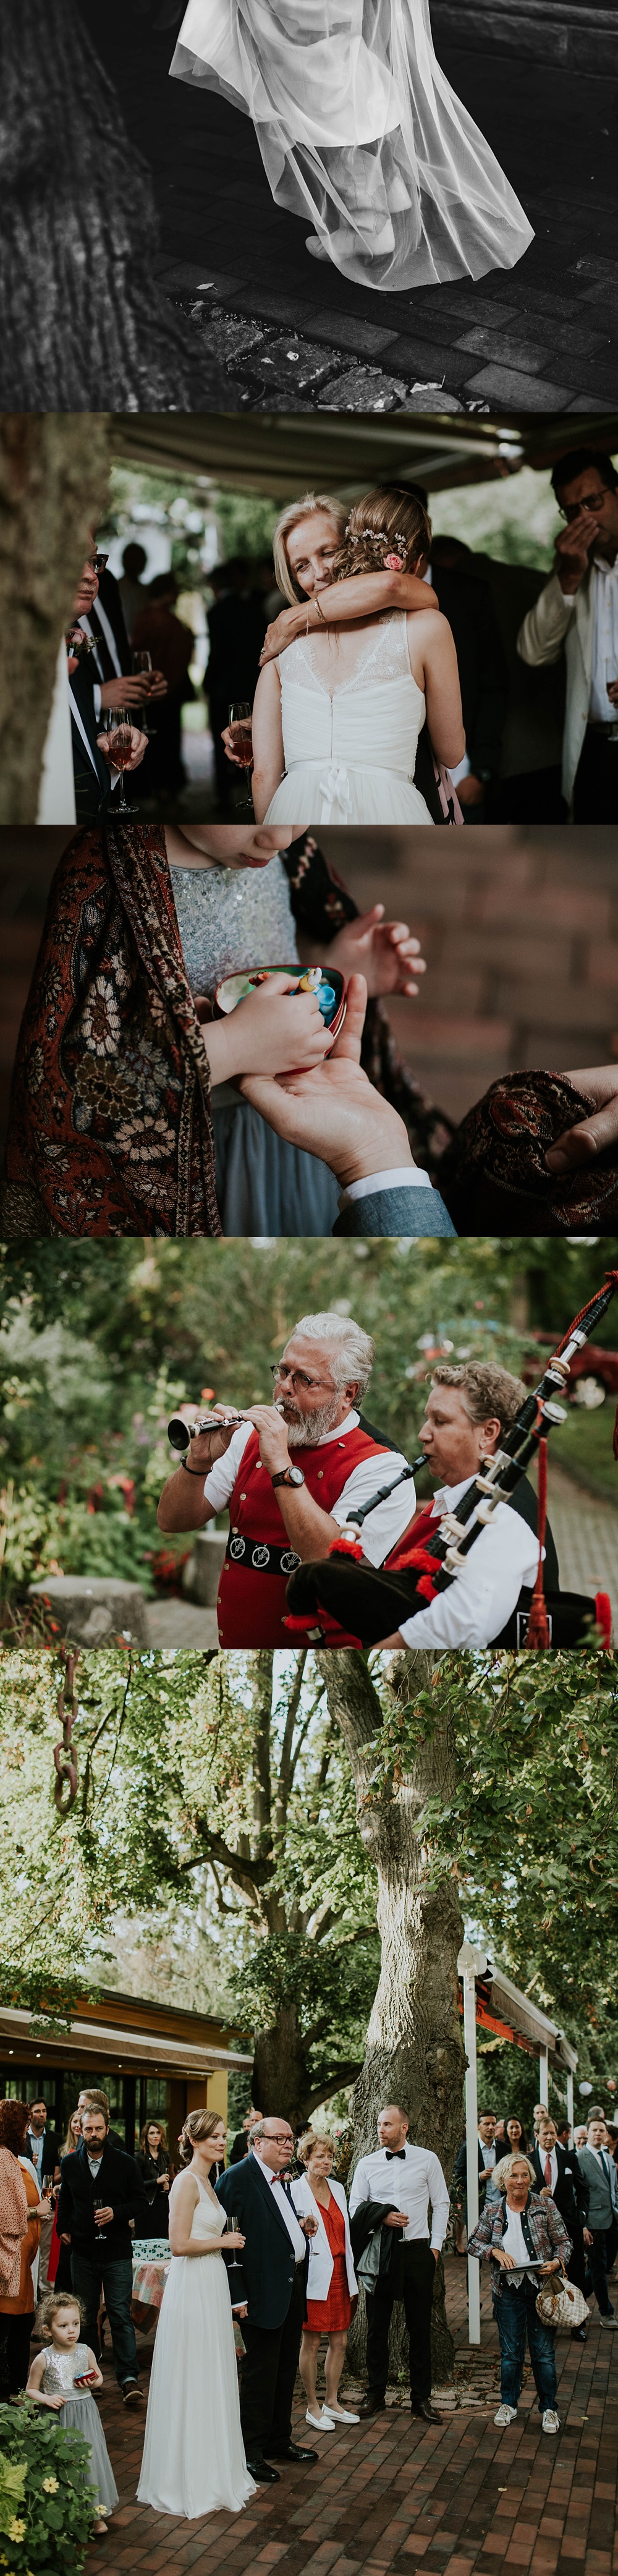 Mariage à Strasbourg en Alsace